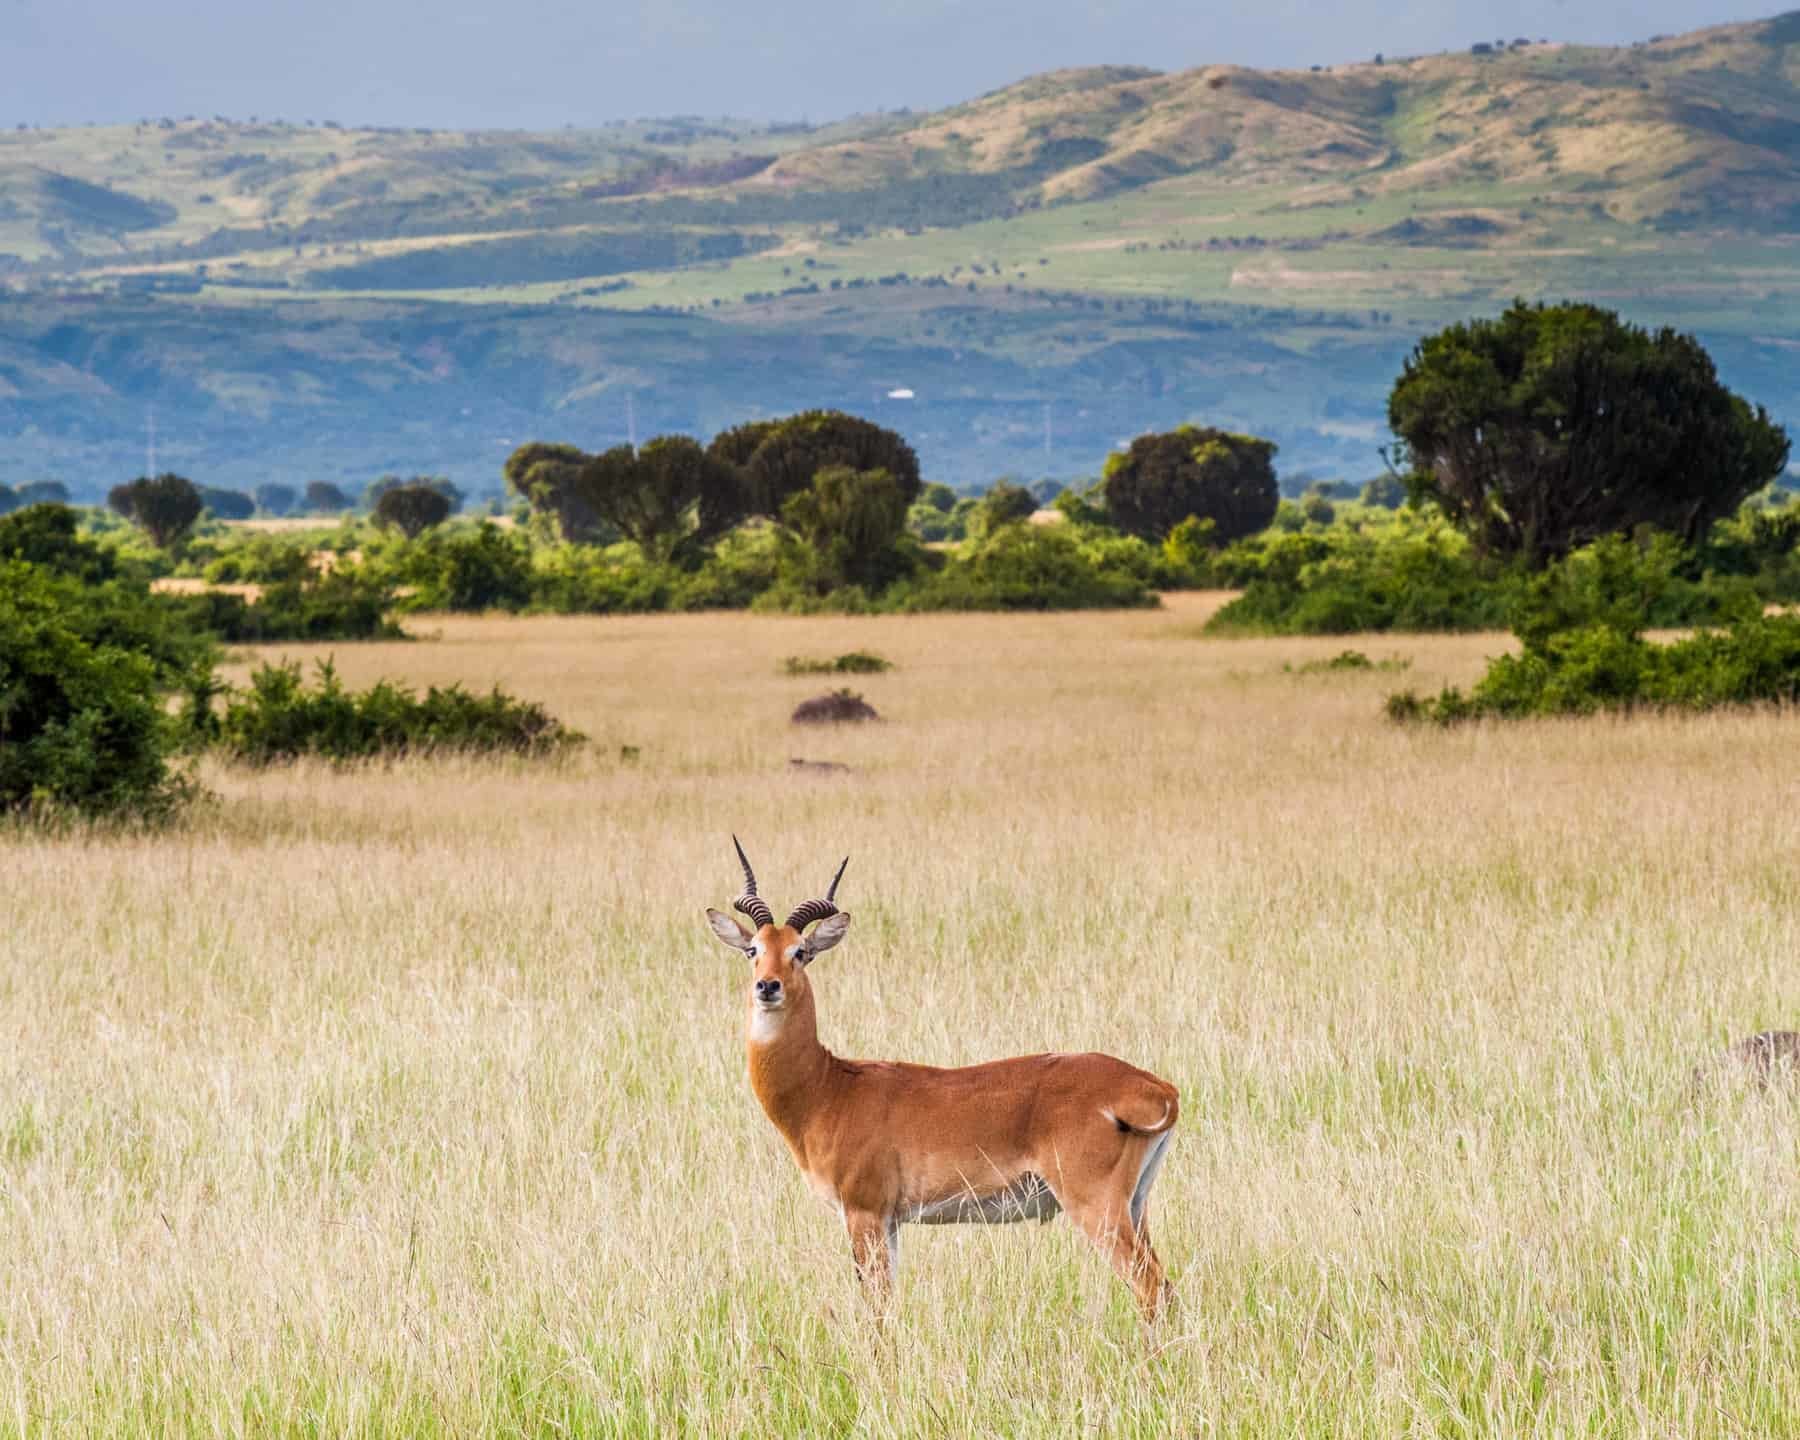 Queen Elizabeth Safari Park in Uganda, antelopes